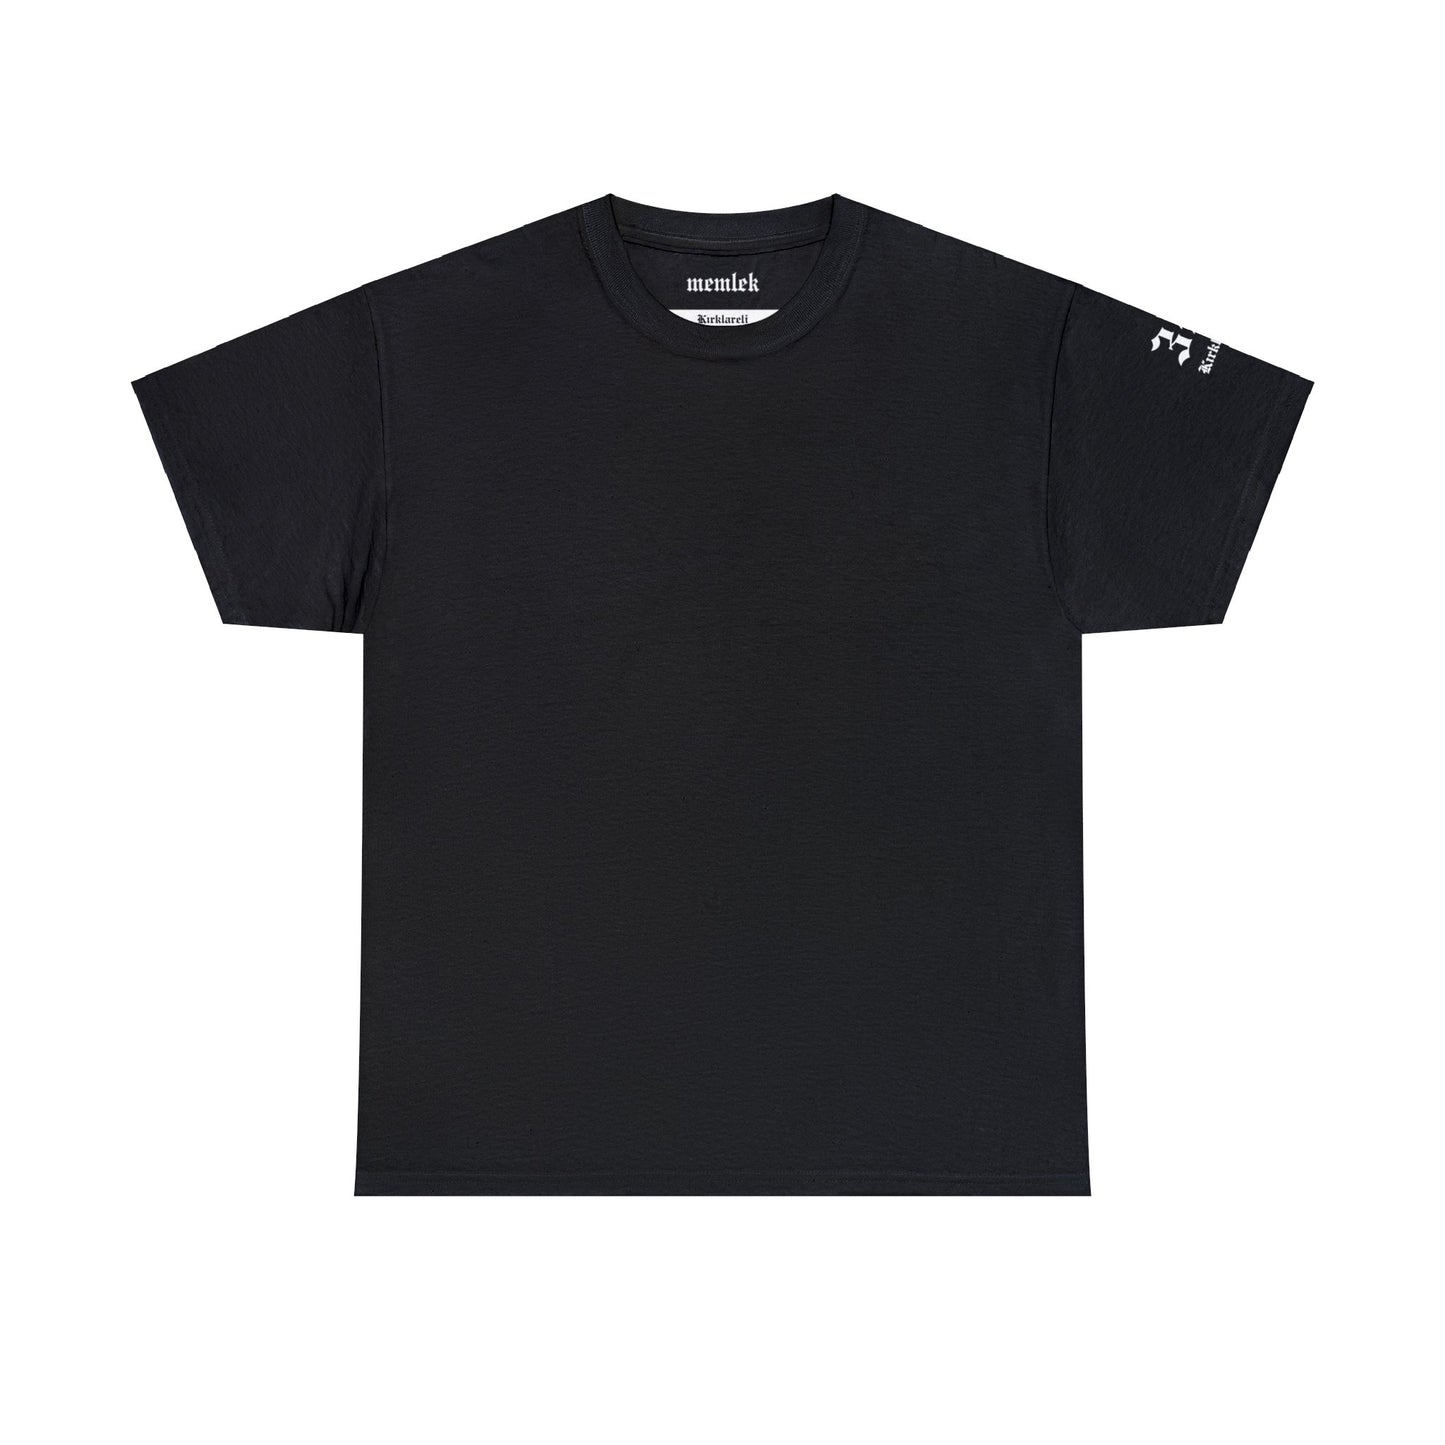 İlçem - 39 Kırklareli - T-Shirt - Back Print - Black